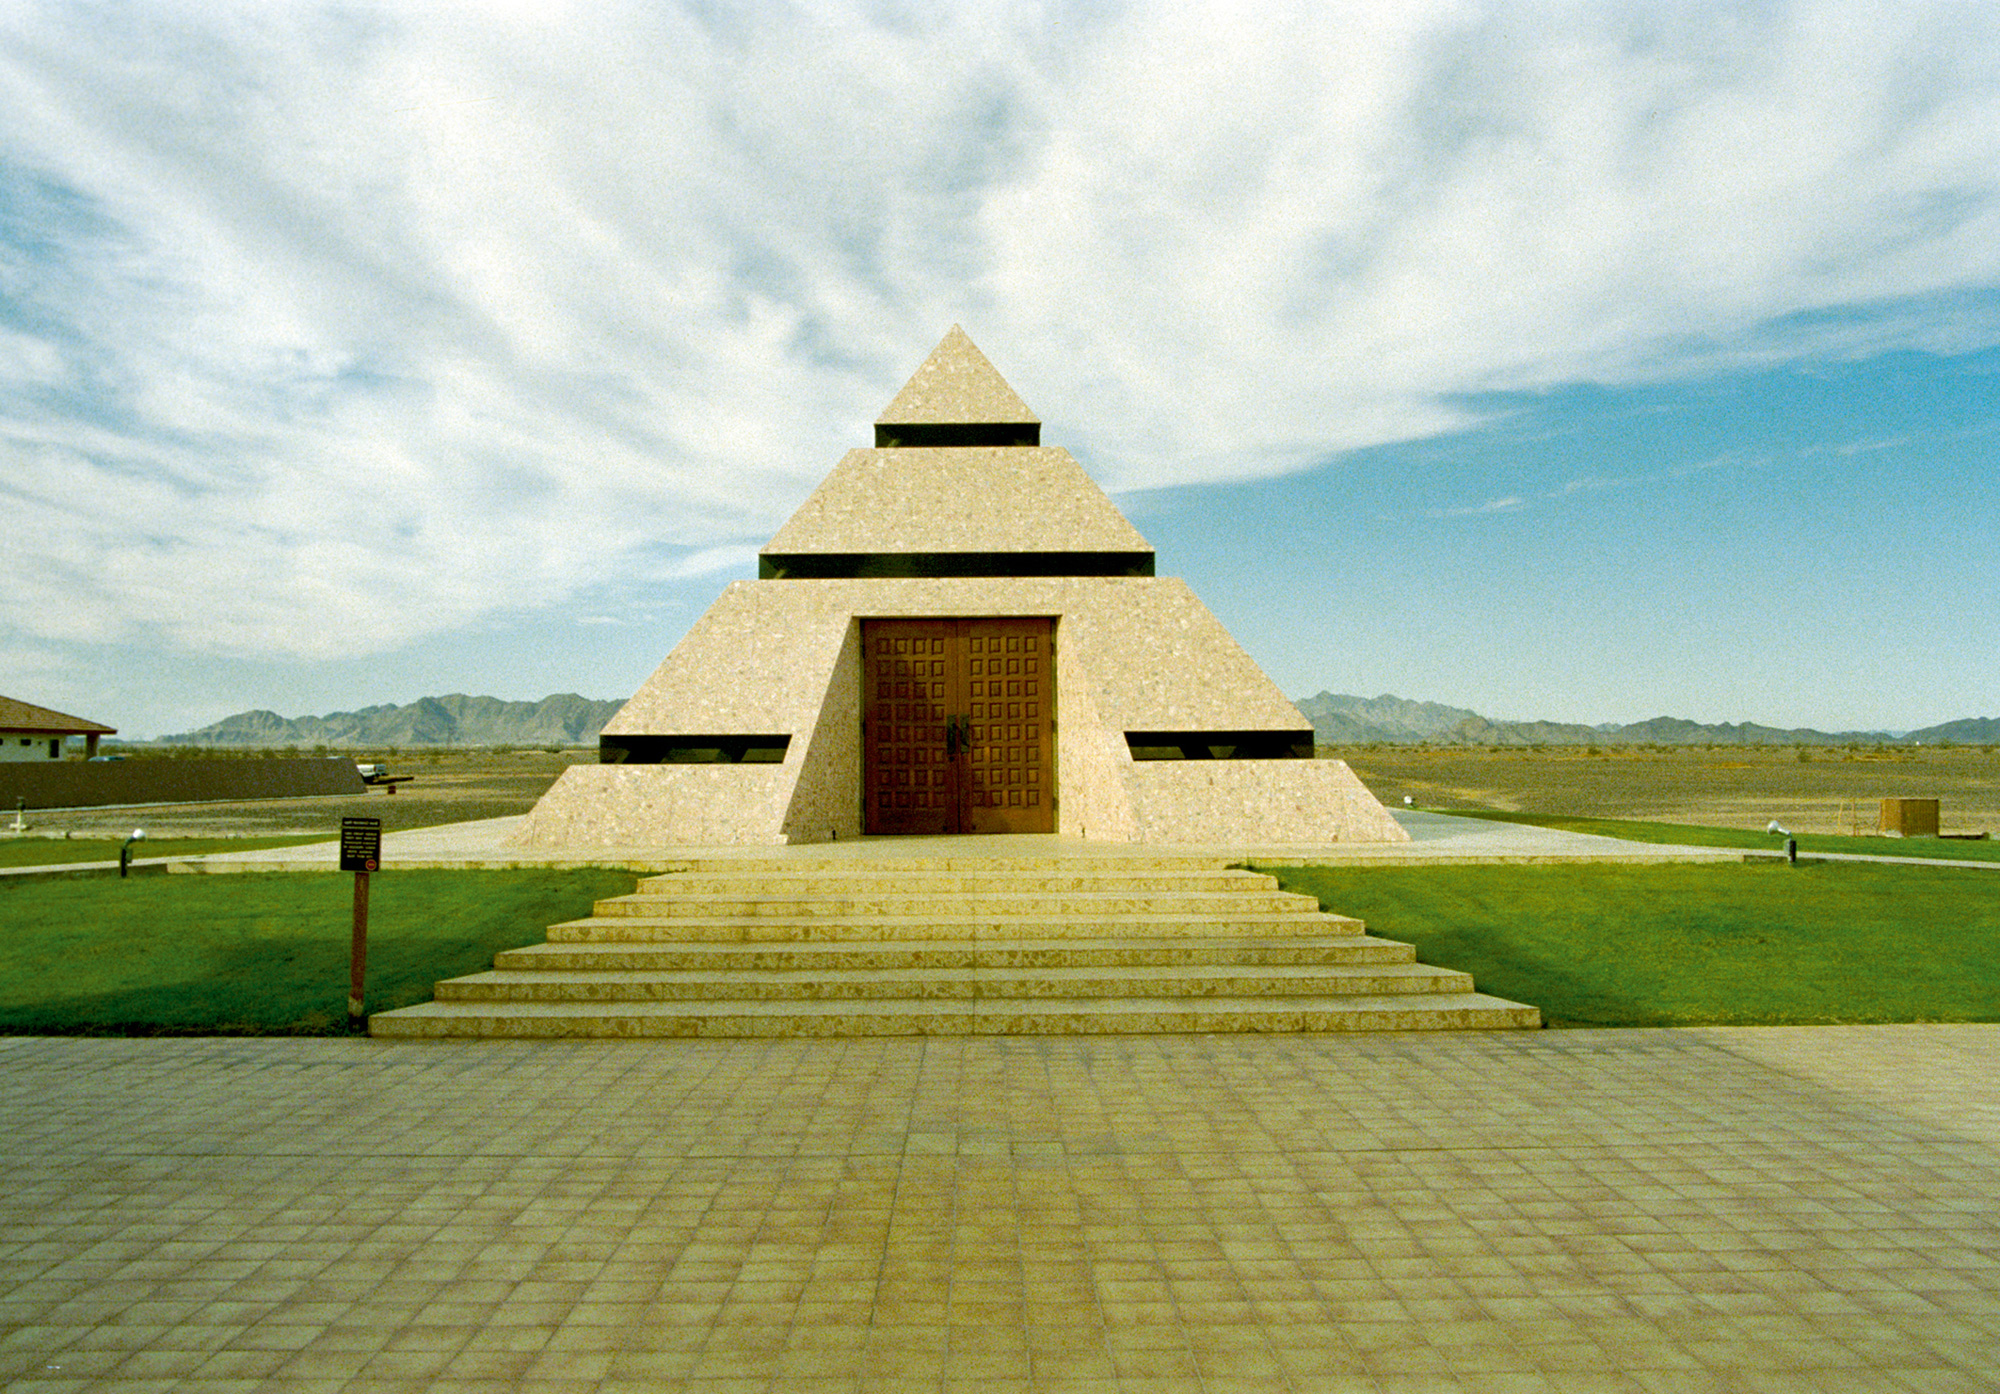 Pyramid at Felicity, aka the Center of the World. Photo Center for Land Use Interpretation.